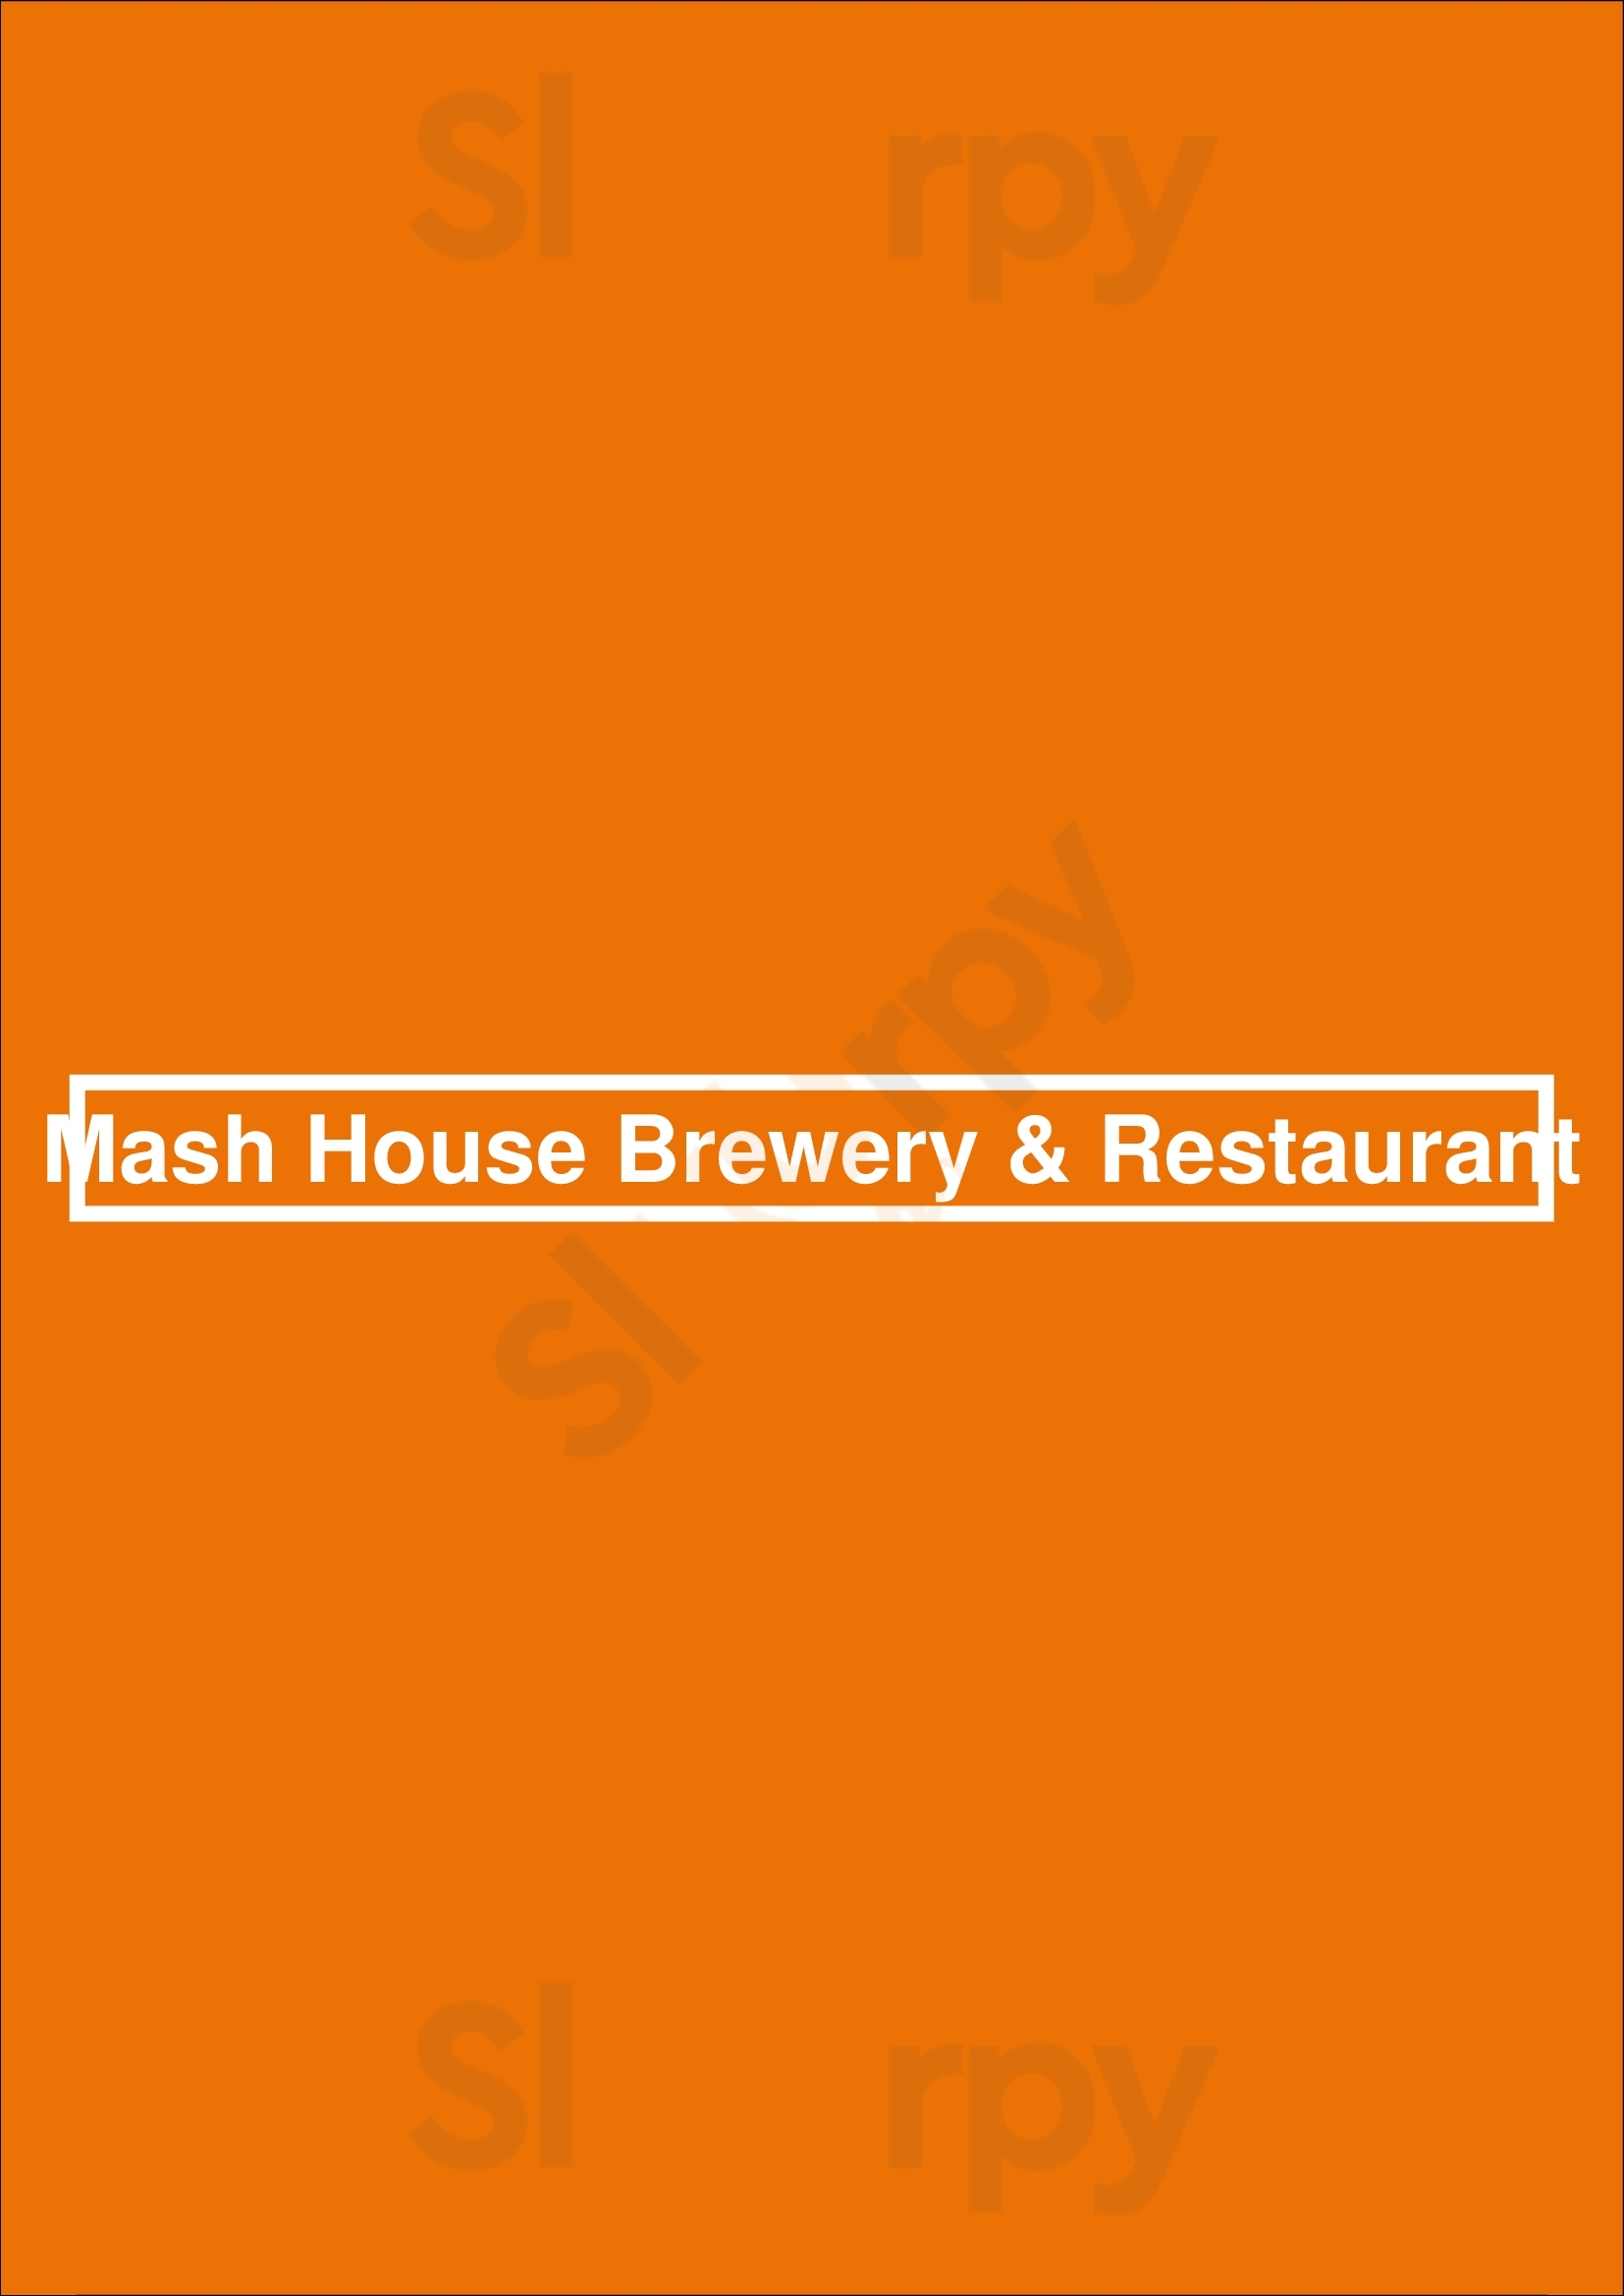 Mash House Brewery & Restaurant Fayetteville Menu - 1